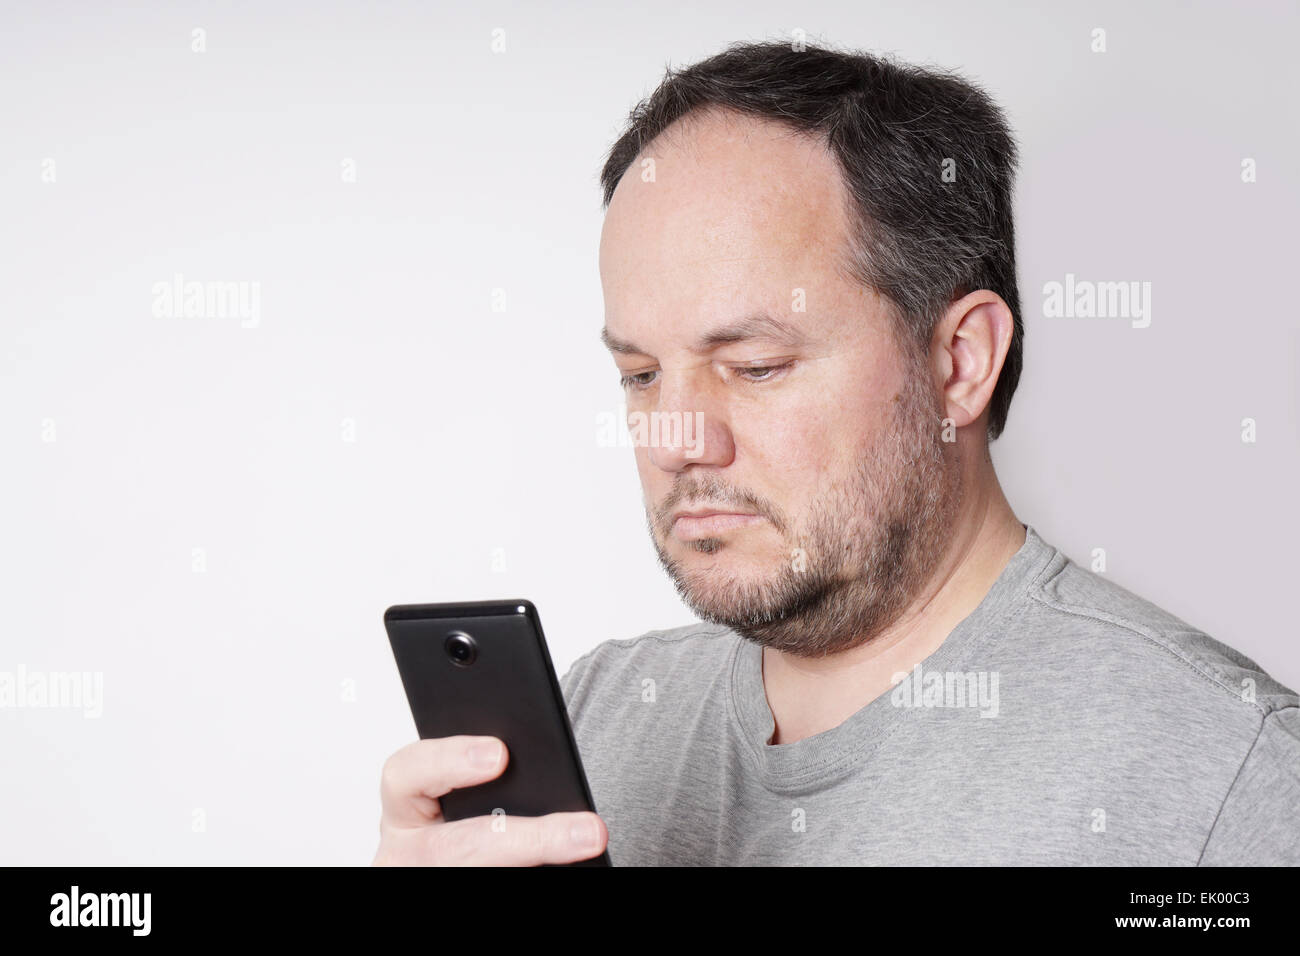 man looking at smart phone Stock Photo